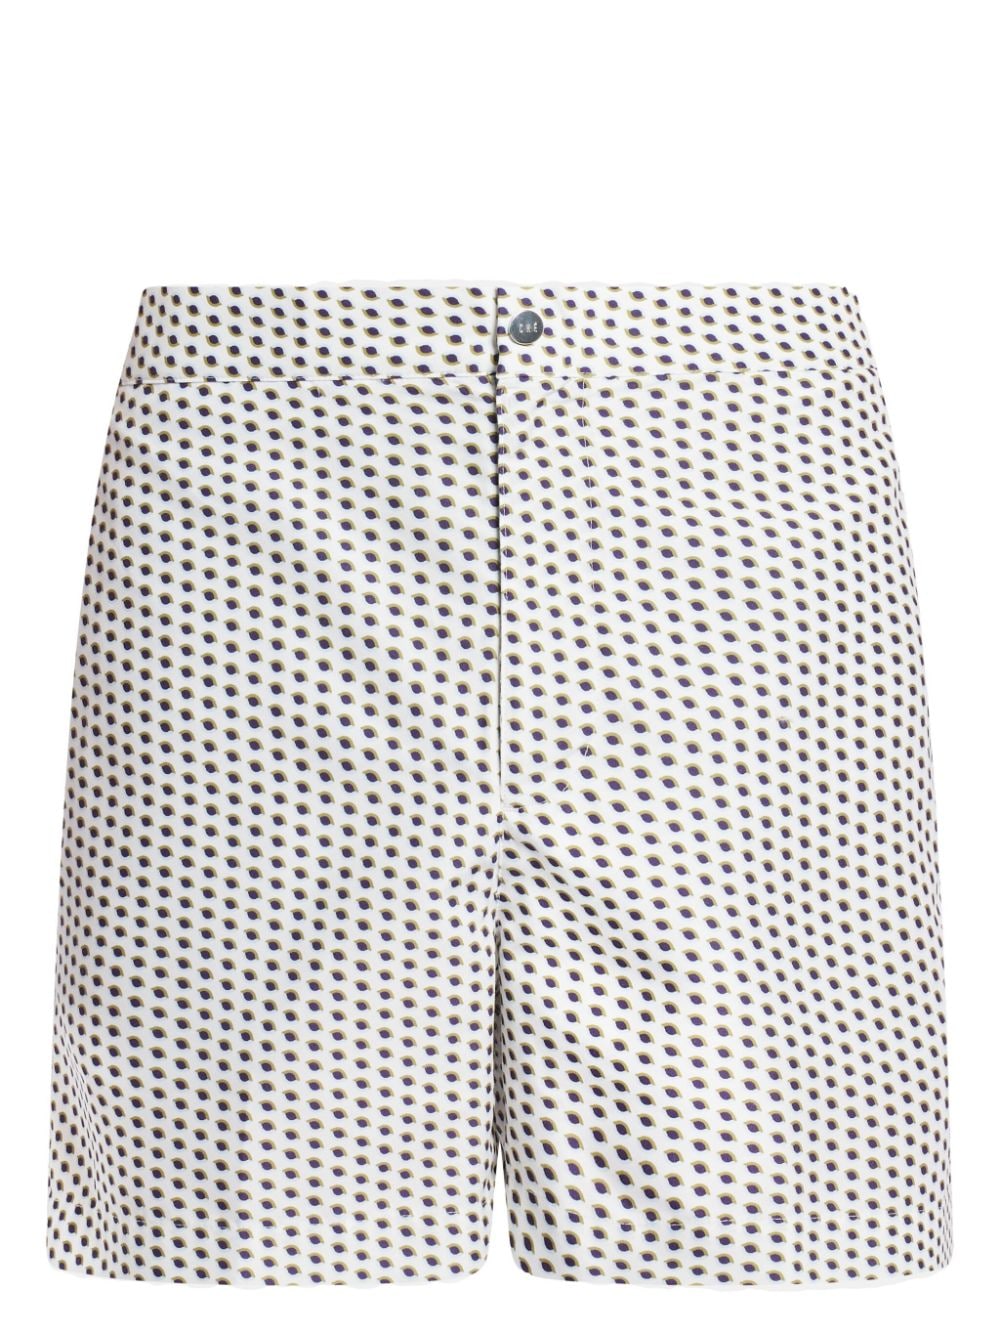 CHÉ abstract pattern swim shorts - White von CHÉ